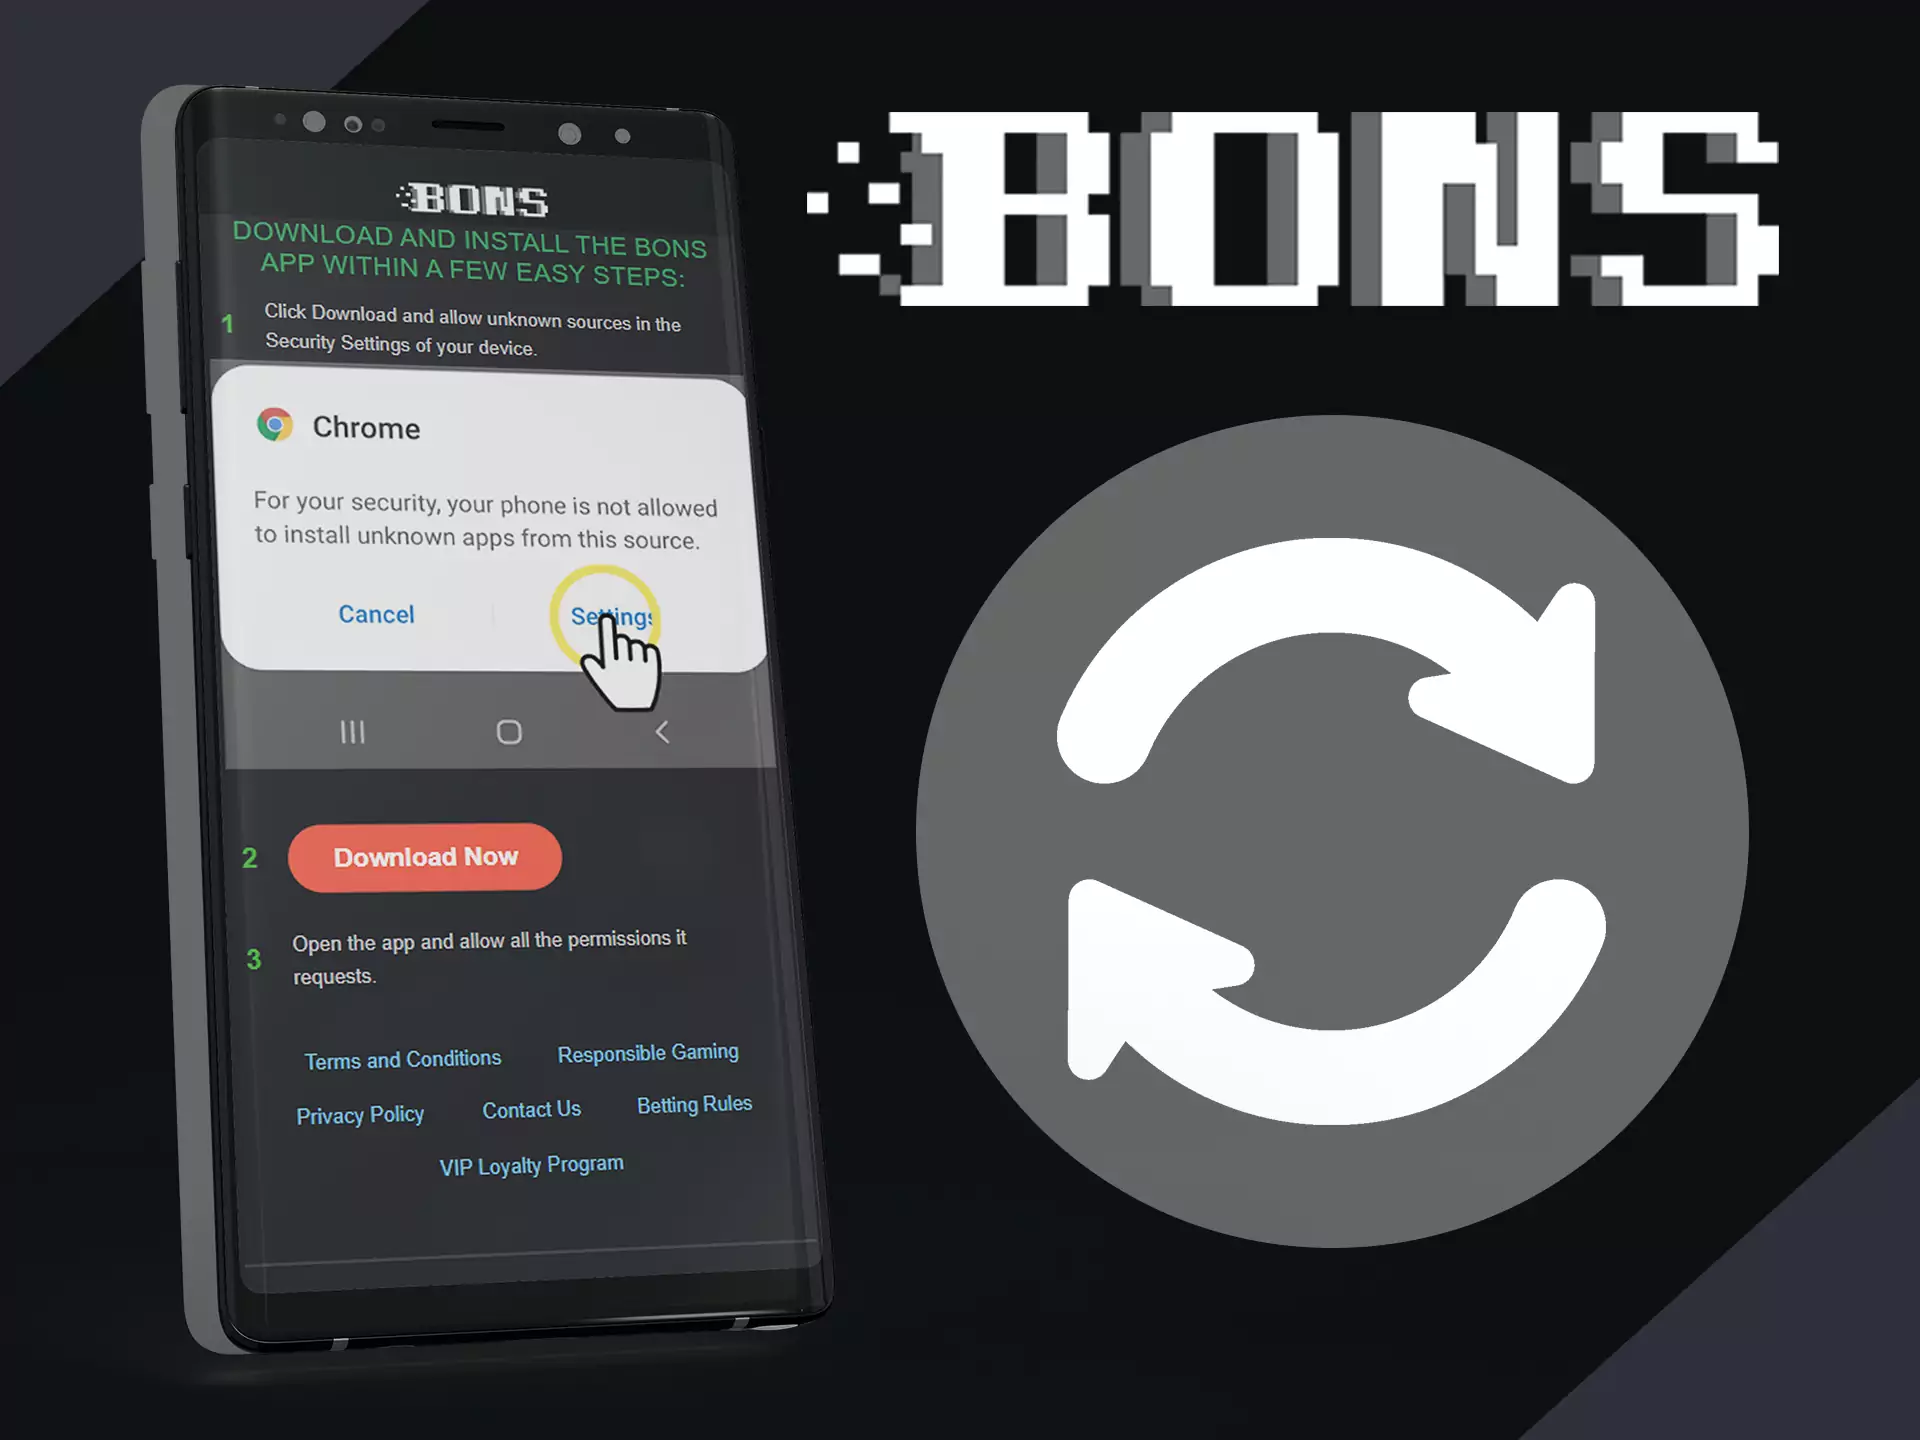 The Bons app receives regular updates.